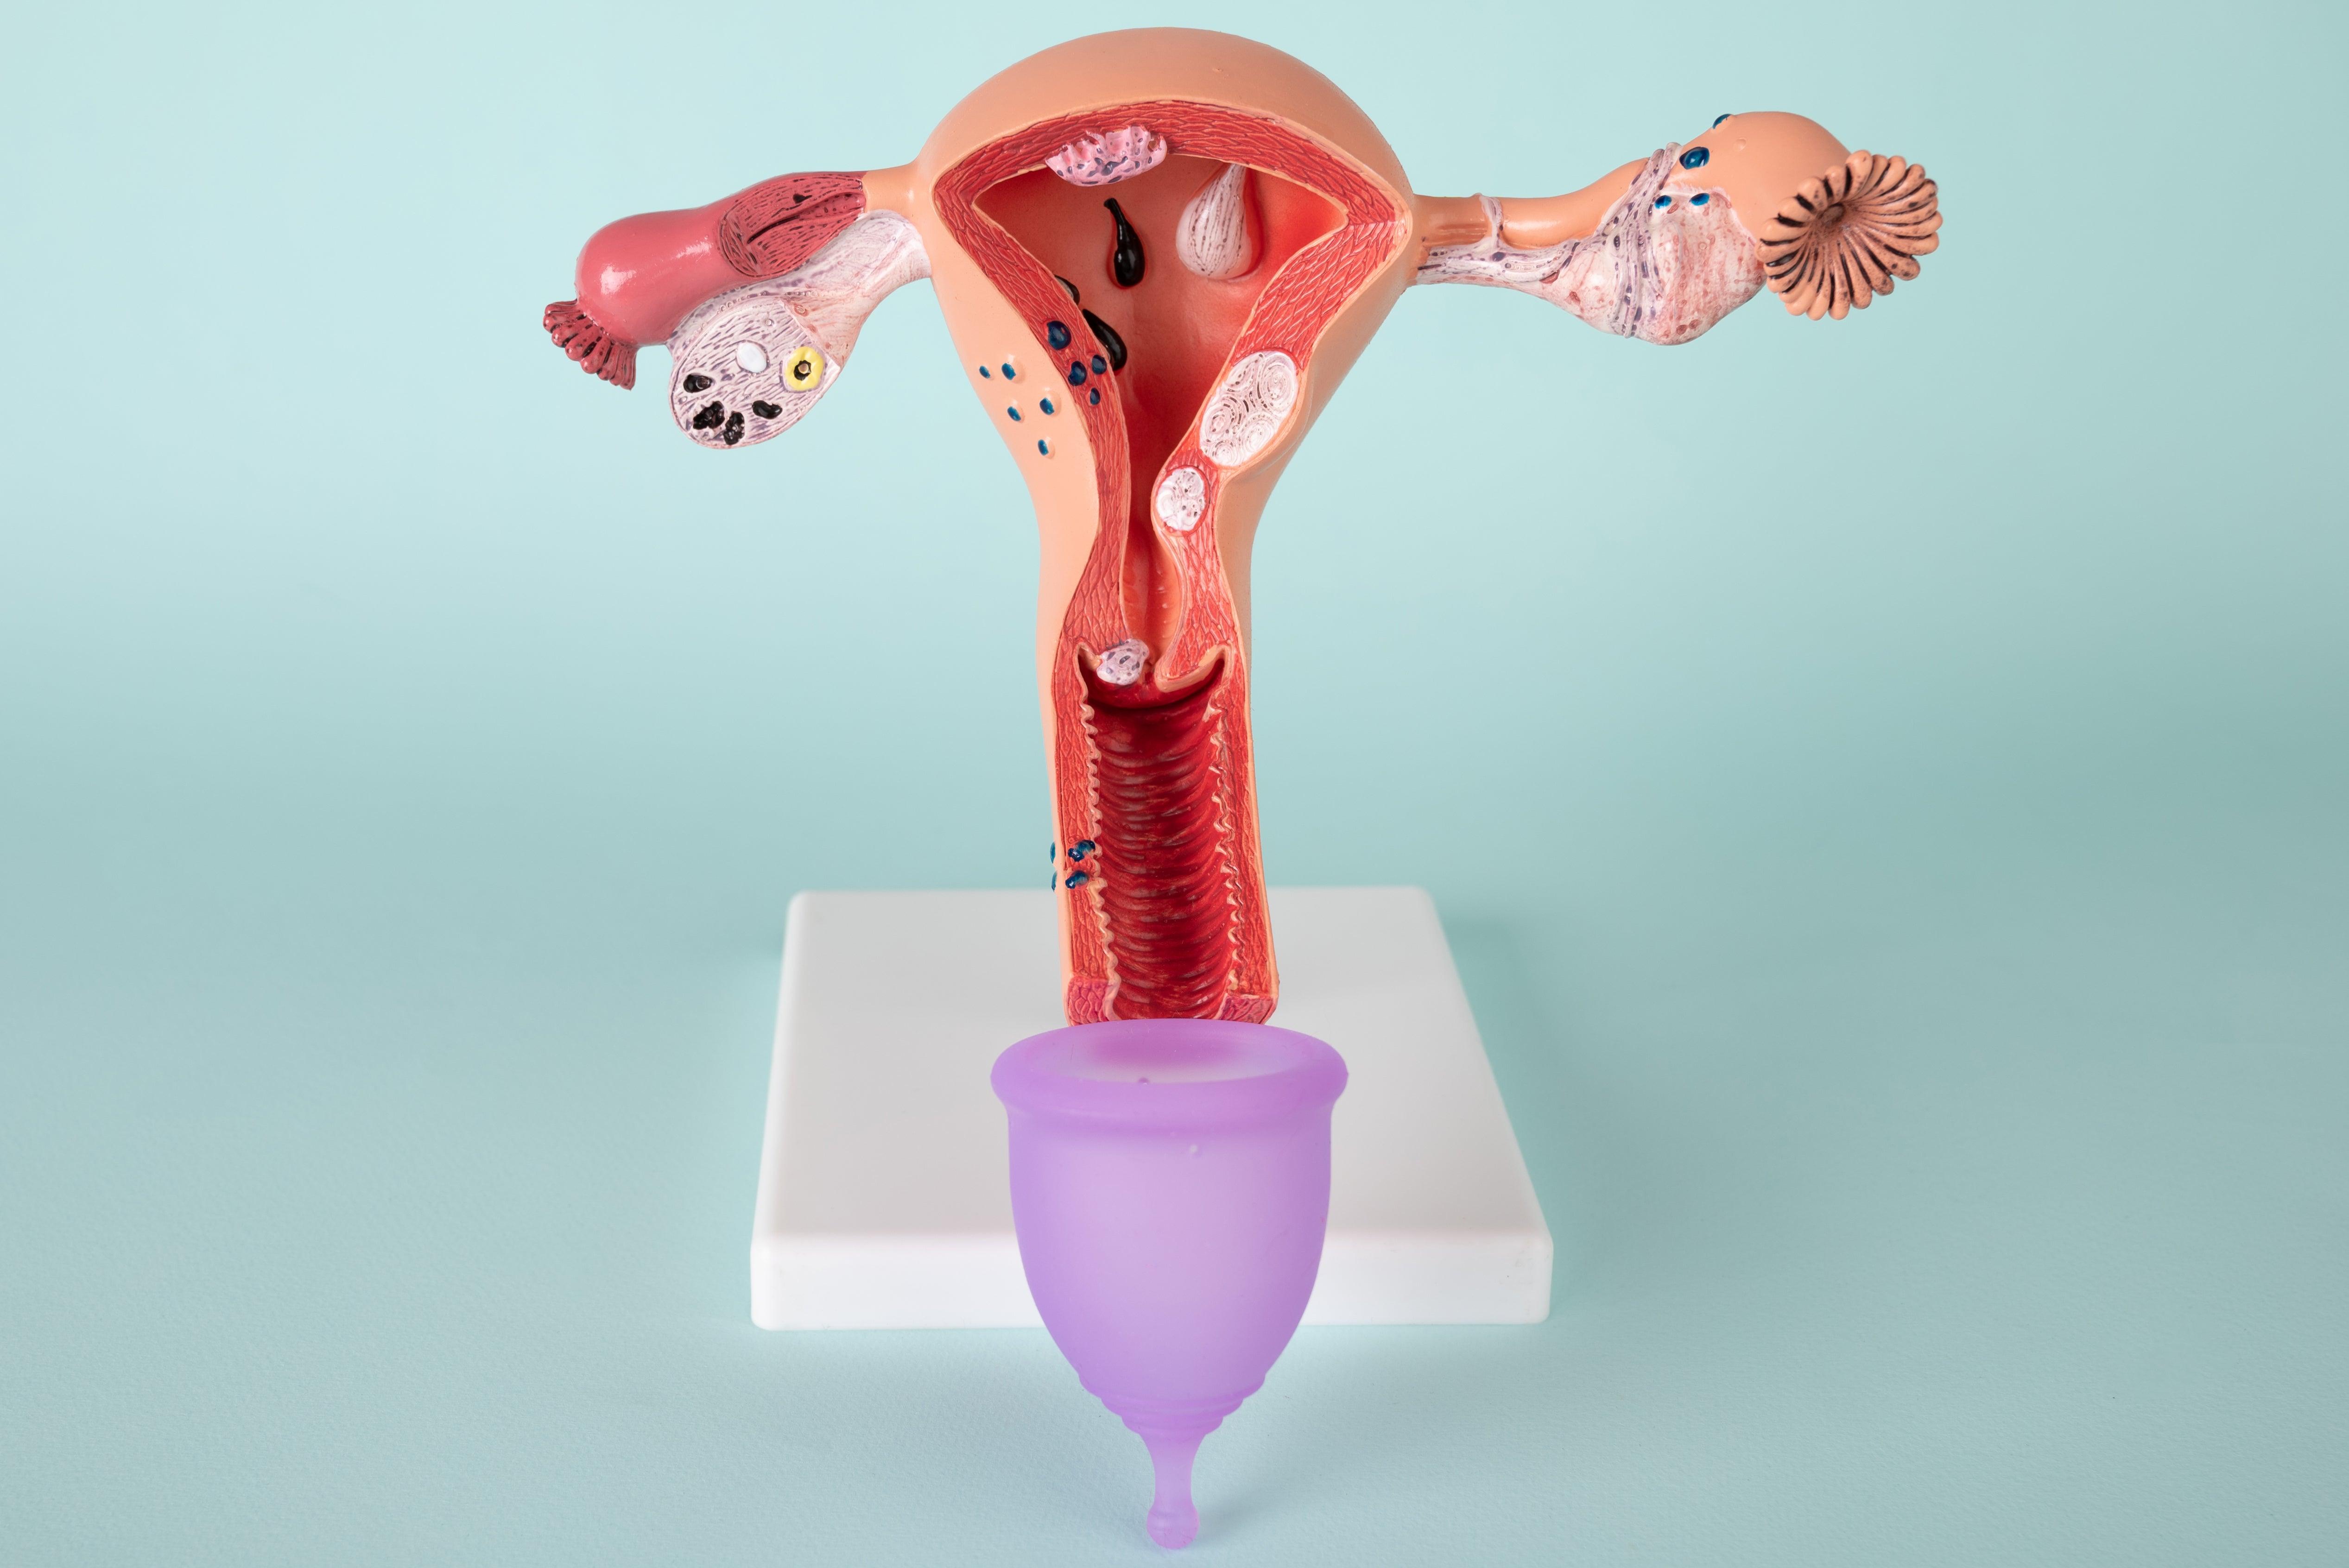 Let's talk about vaginal discharge